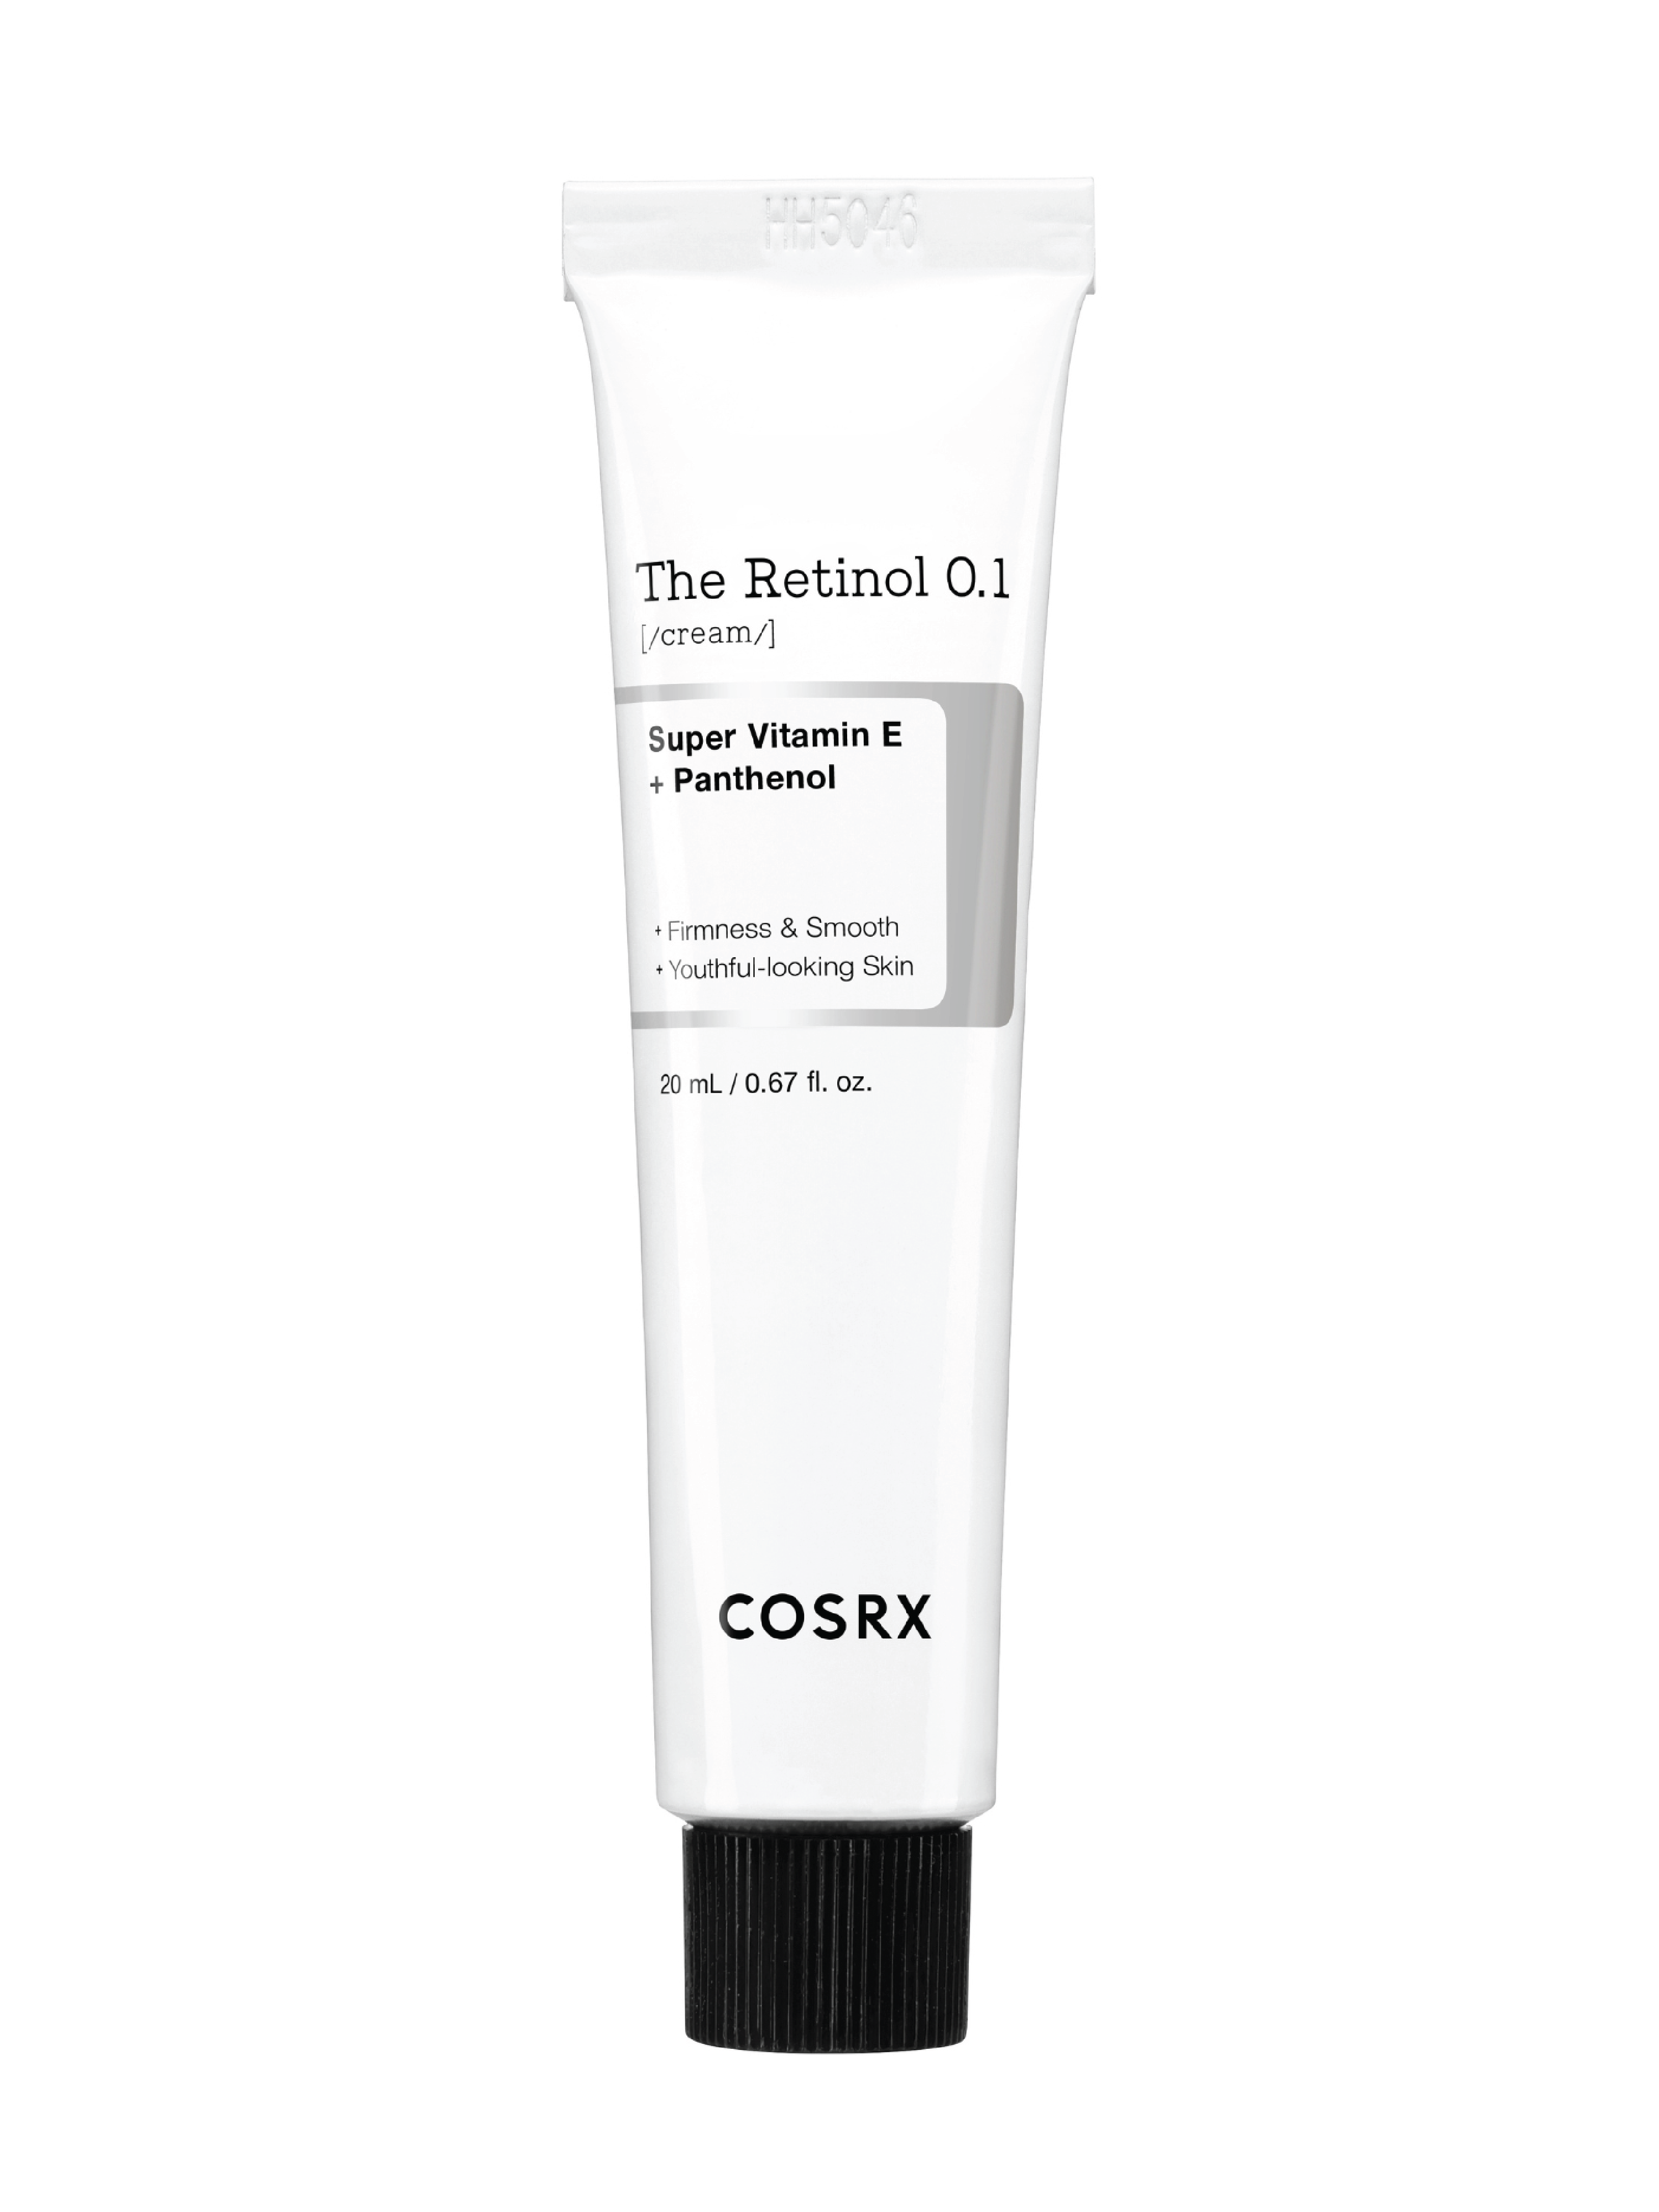 COSRX The Retinol 0.1 Cream, 20 ml